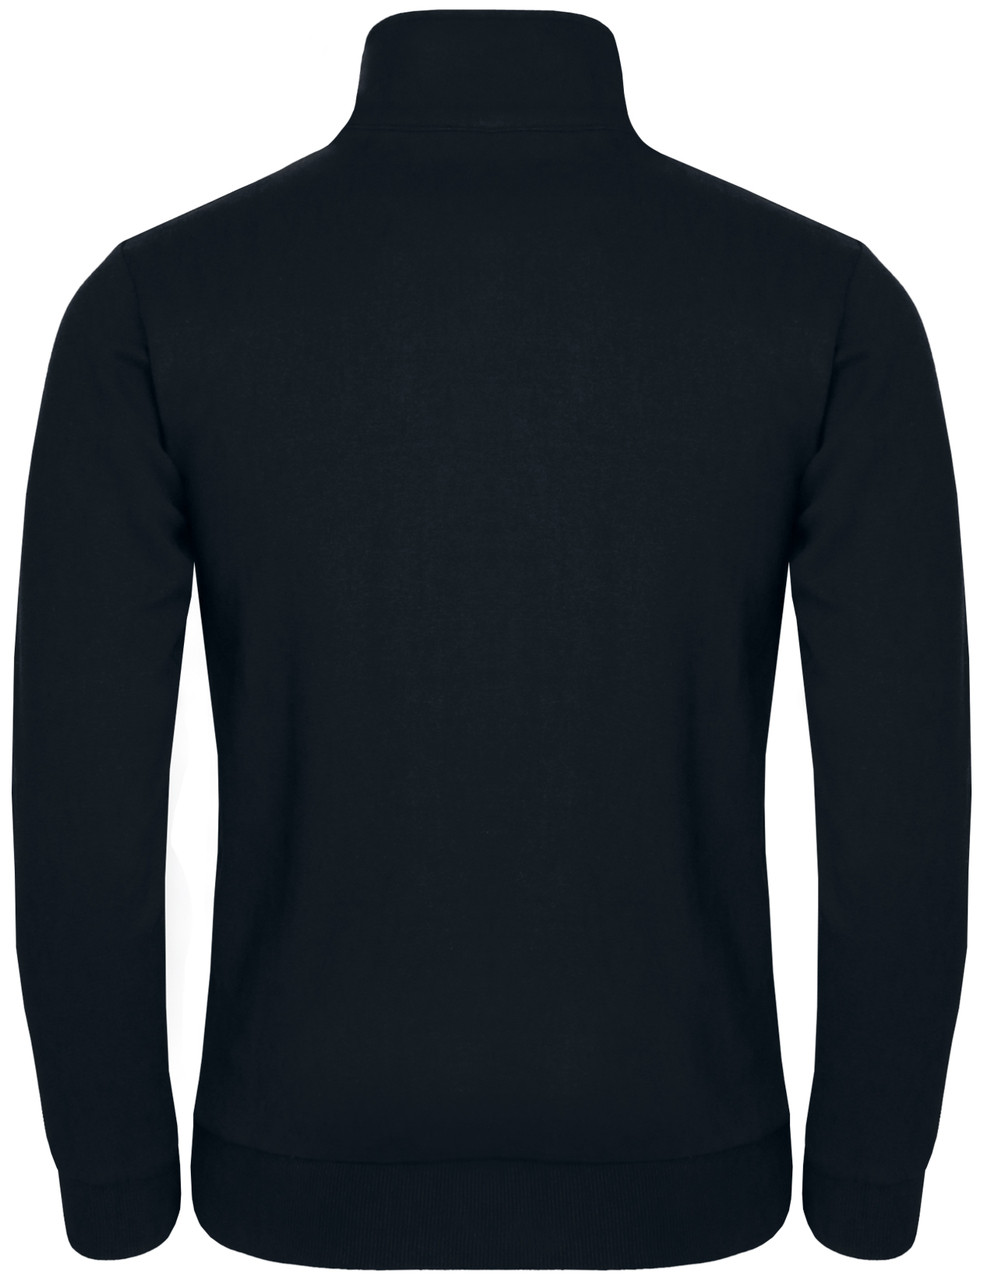 Long Sleeve Jersey cotton jacket Full zip-up style-Unisex